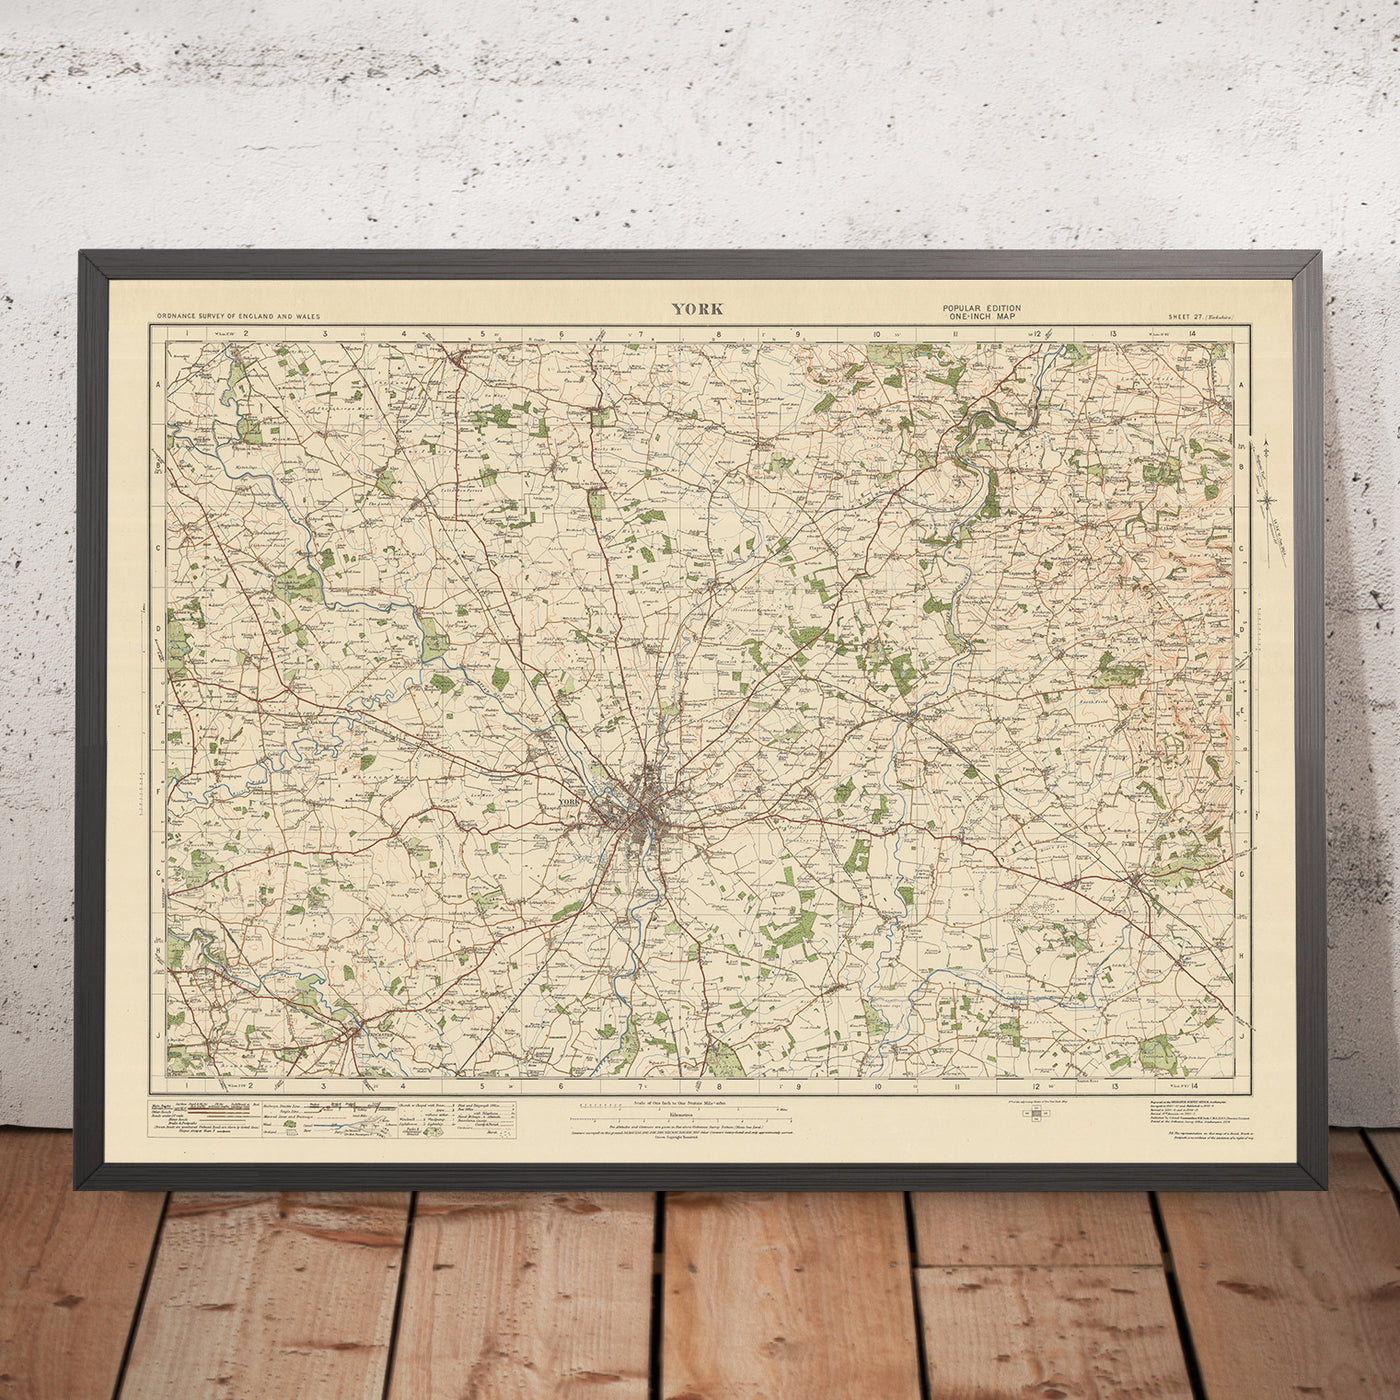 Alte Ordnance Survey Karte, Blatt 27 - York, 1925: Pocklington, Tadcaster, Easingwold, Stamford Bridge, Boston Spa